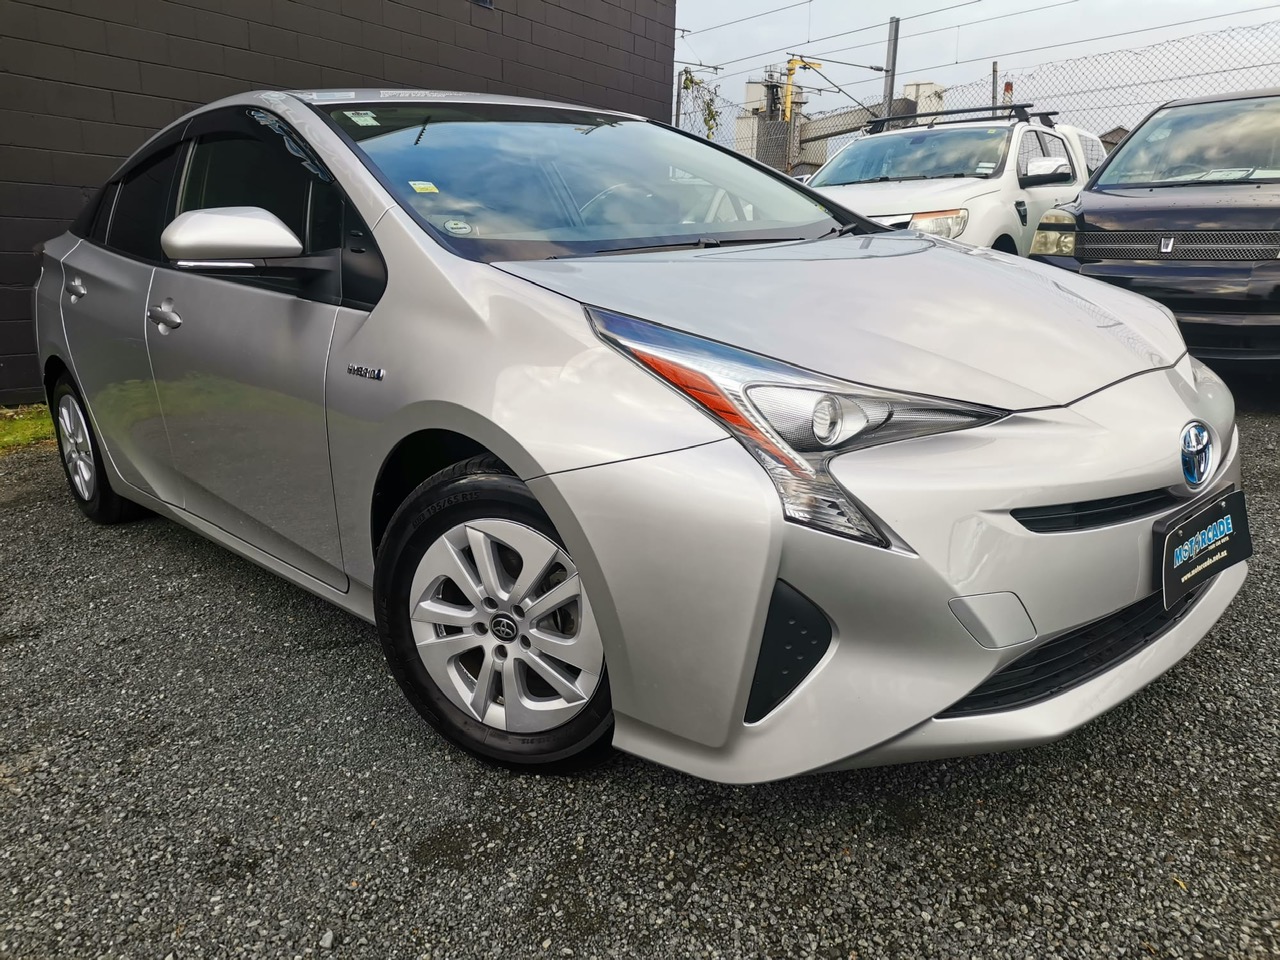 Toyota Prius 2017 Image 2